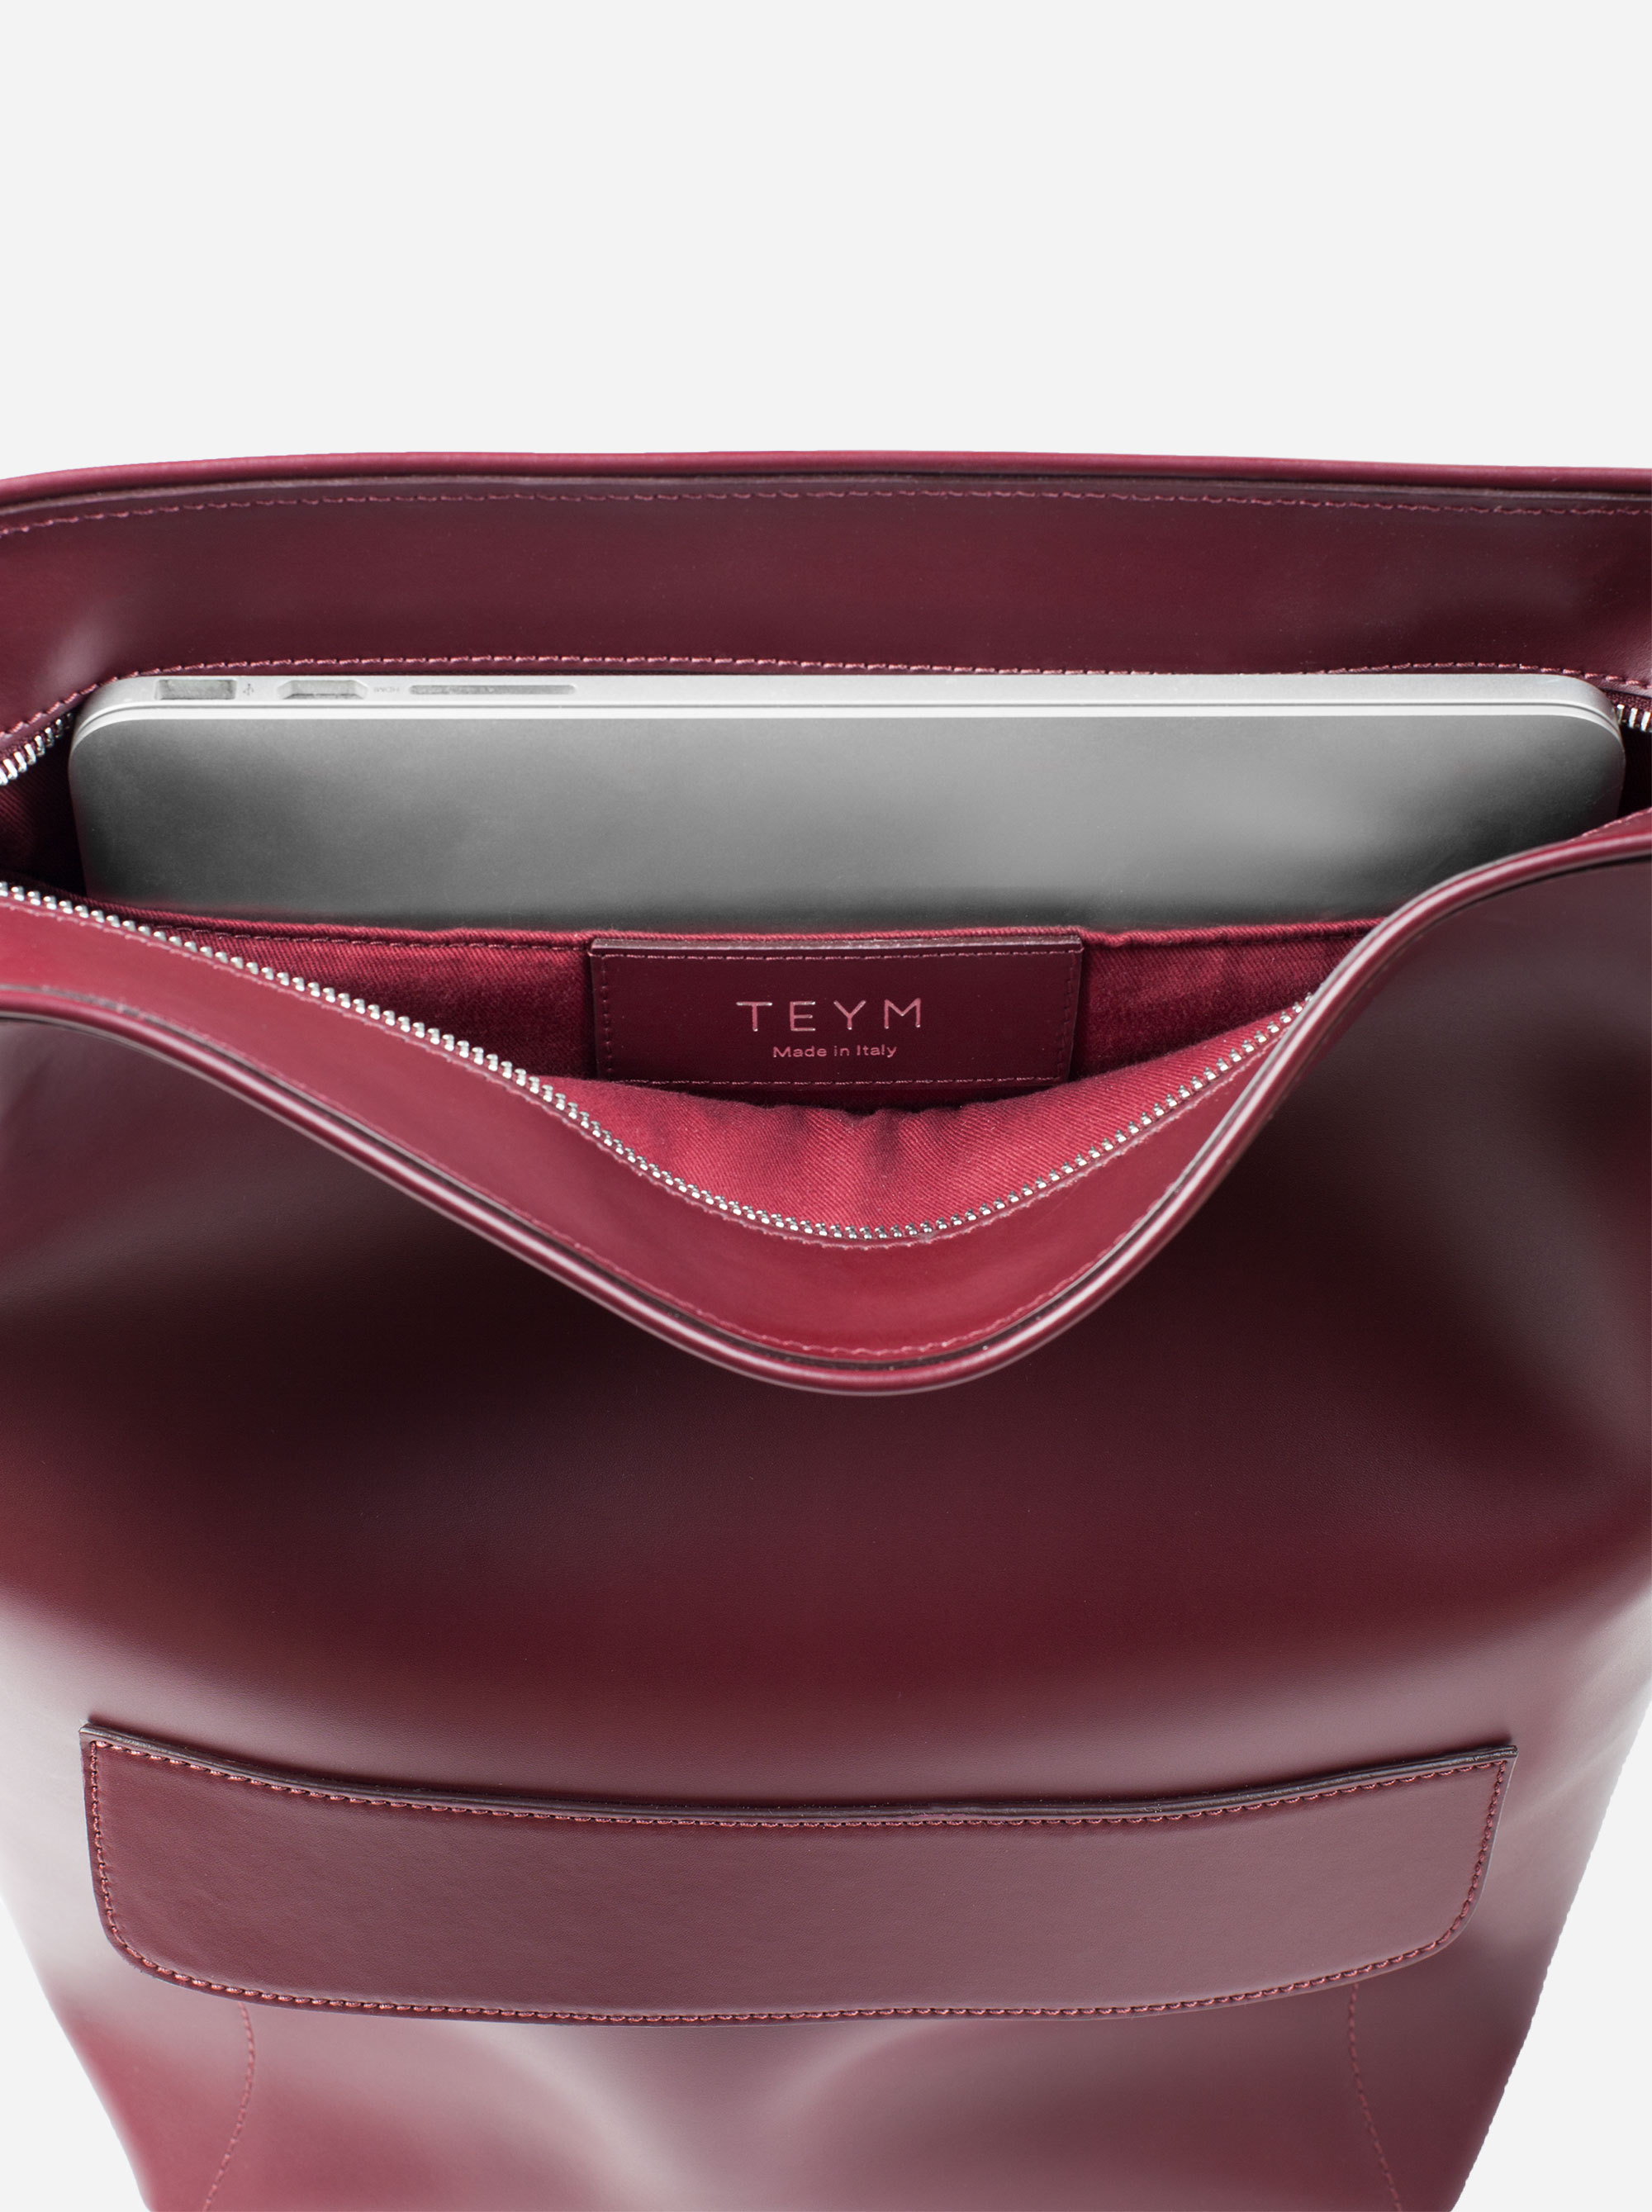 Teym - The Shoulder Bag - Burgundy - 2